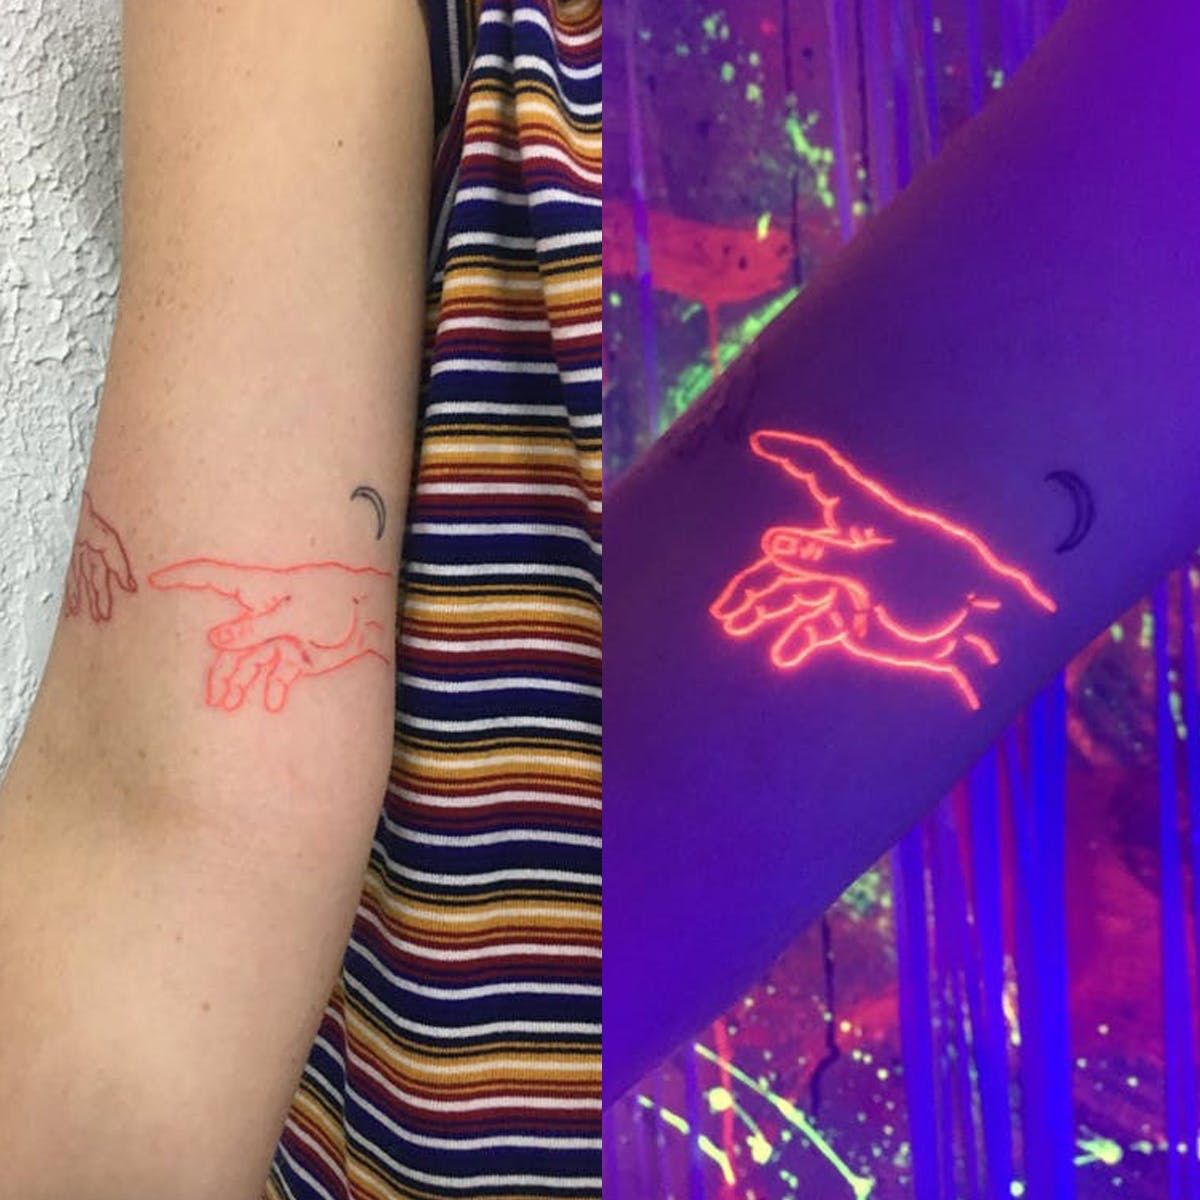 Meet the Tattoo Artist Whose Work Glows in the Dark